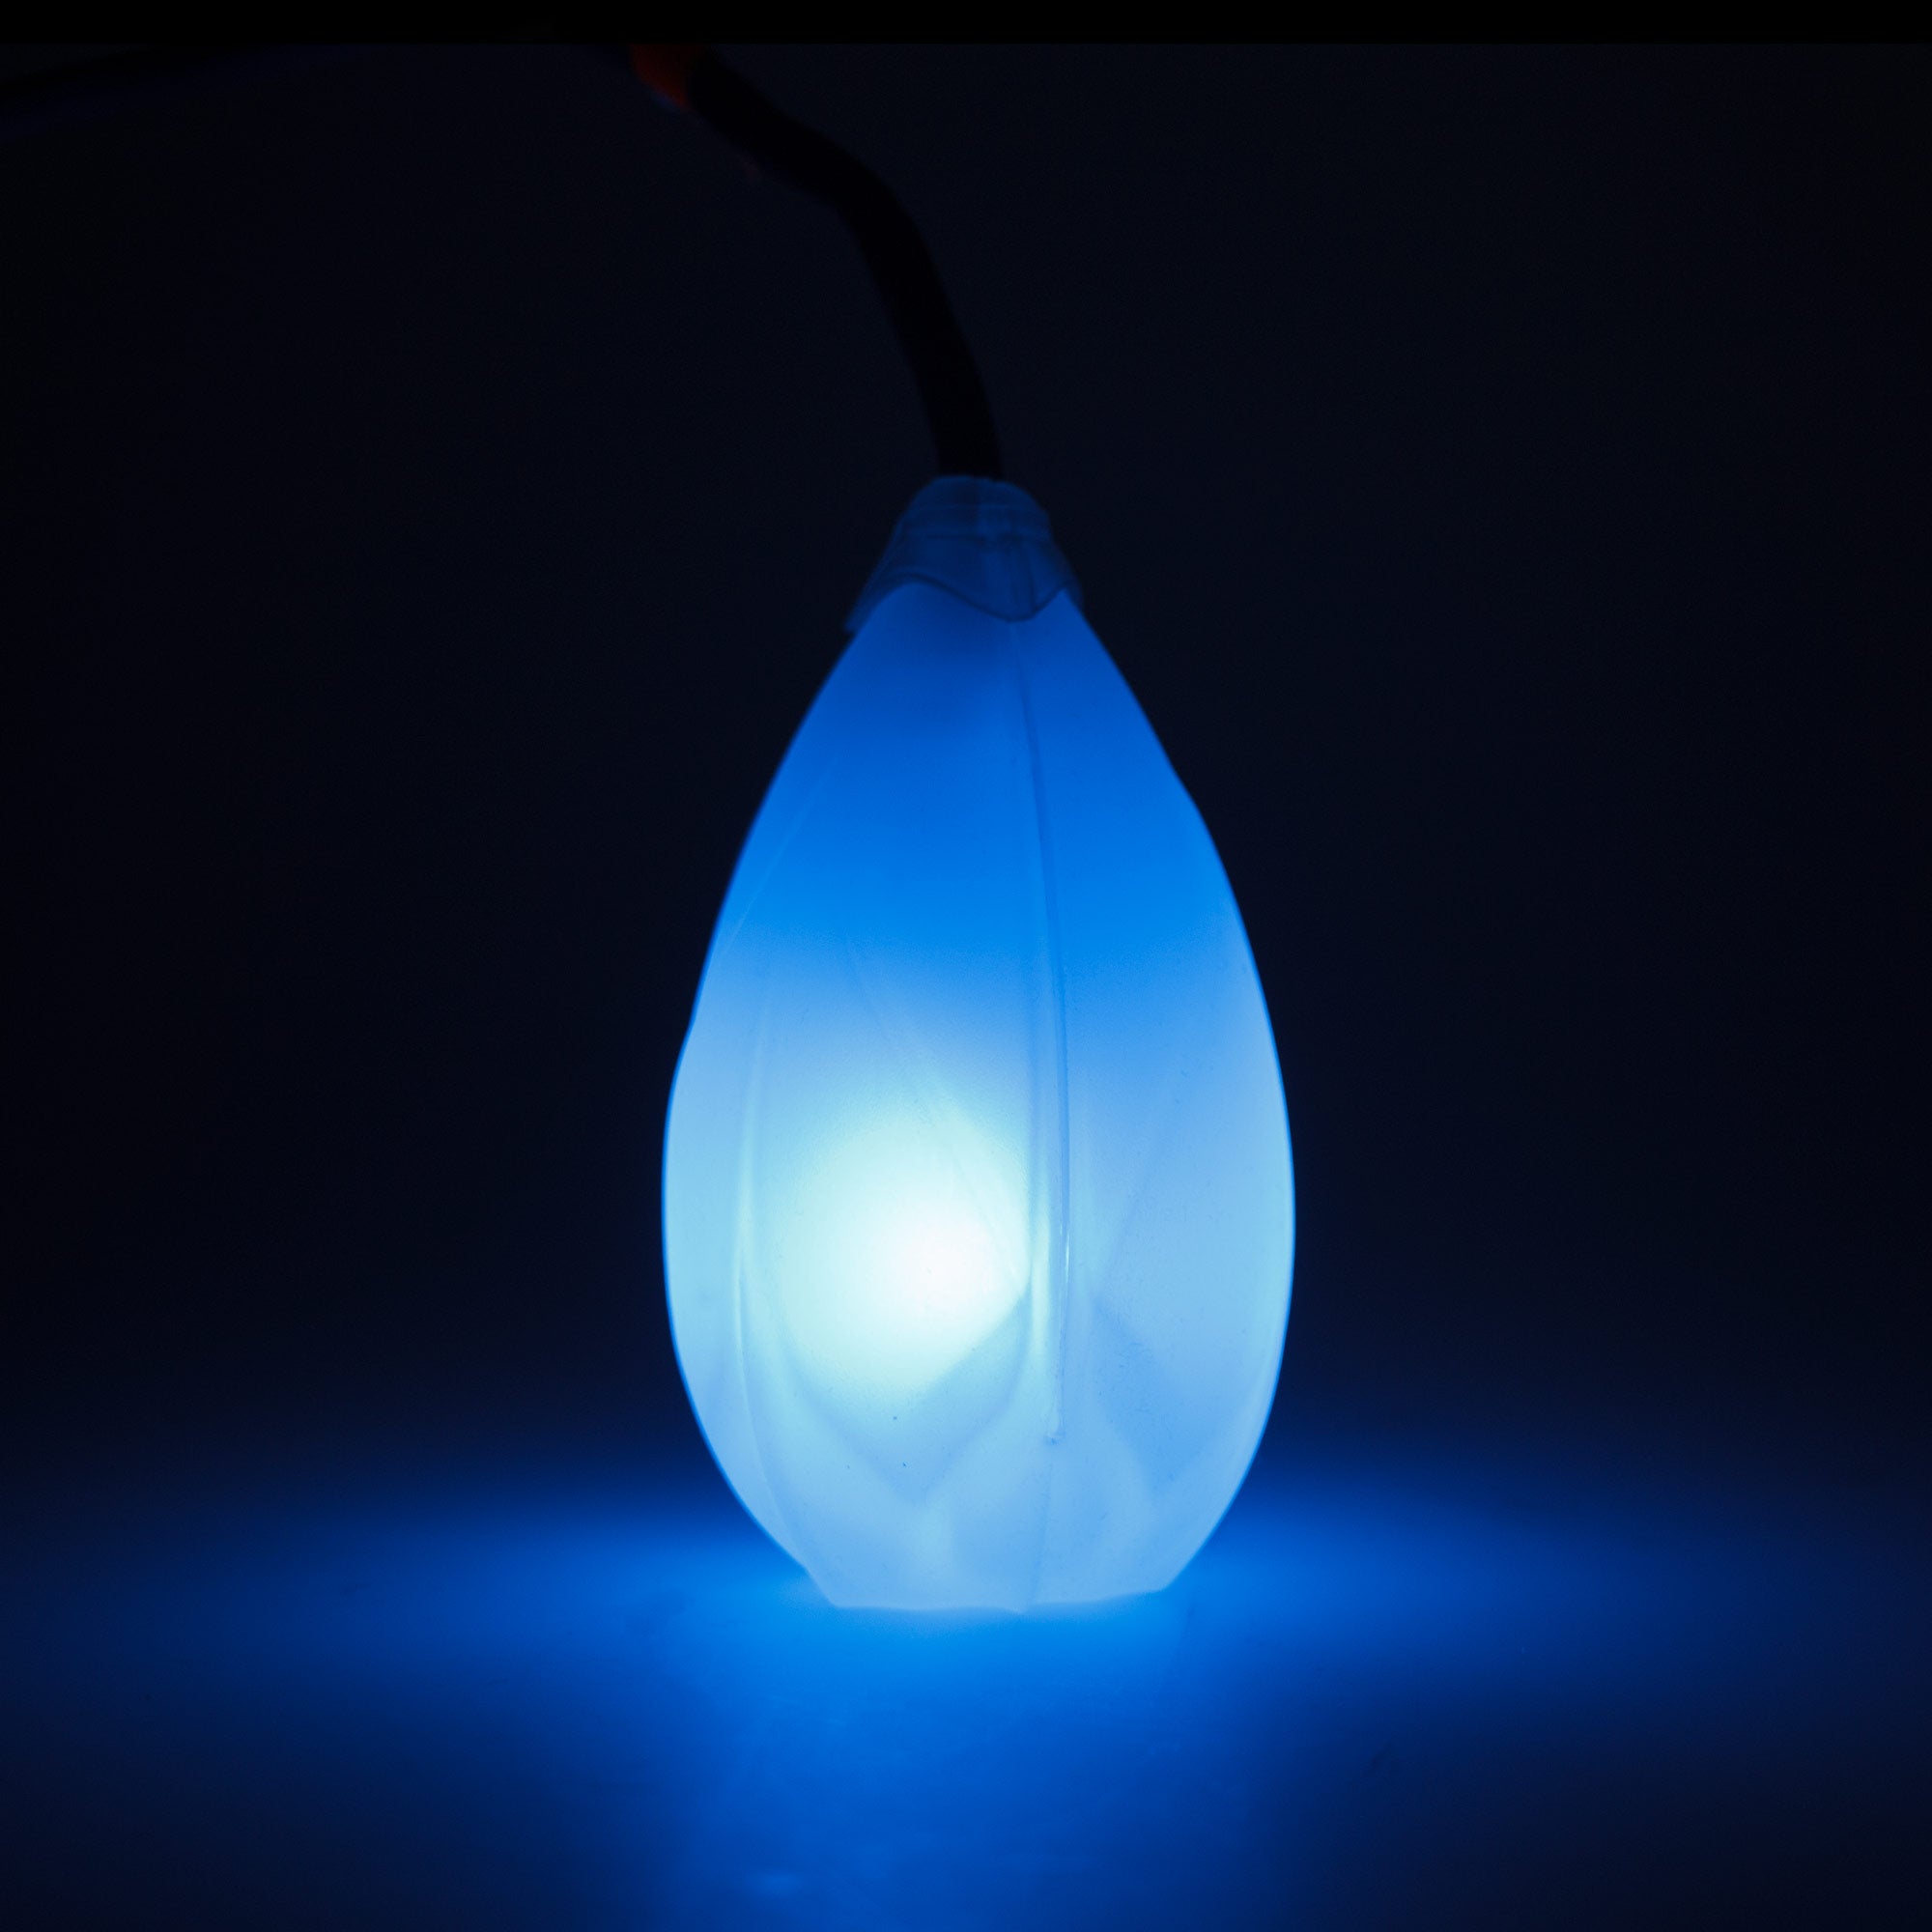 single Flowtoys Podpoi v2 glowing blue and illuminating the table